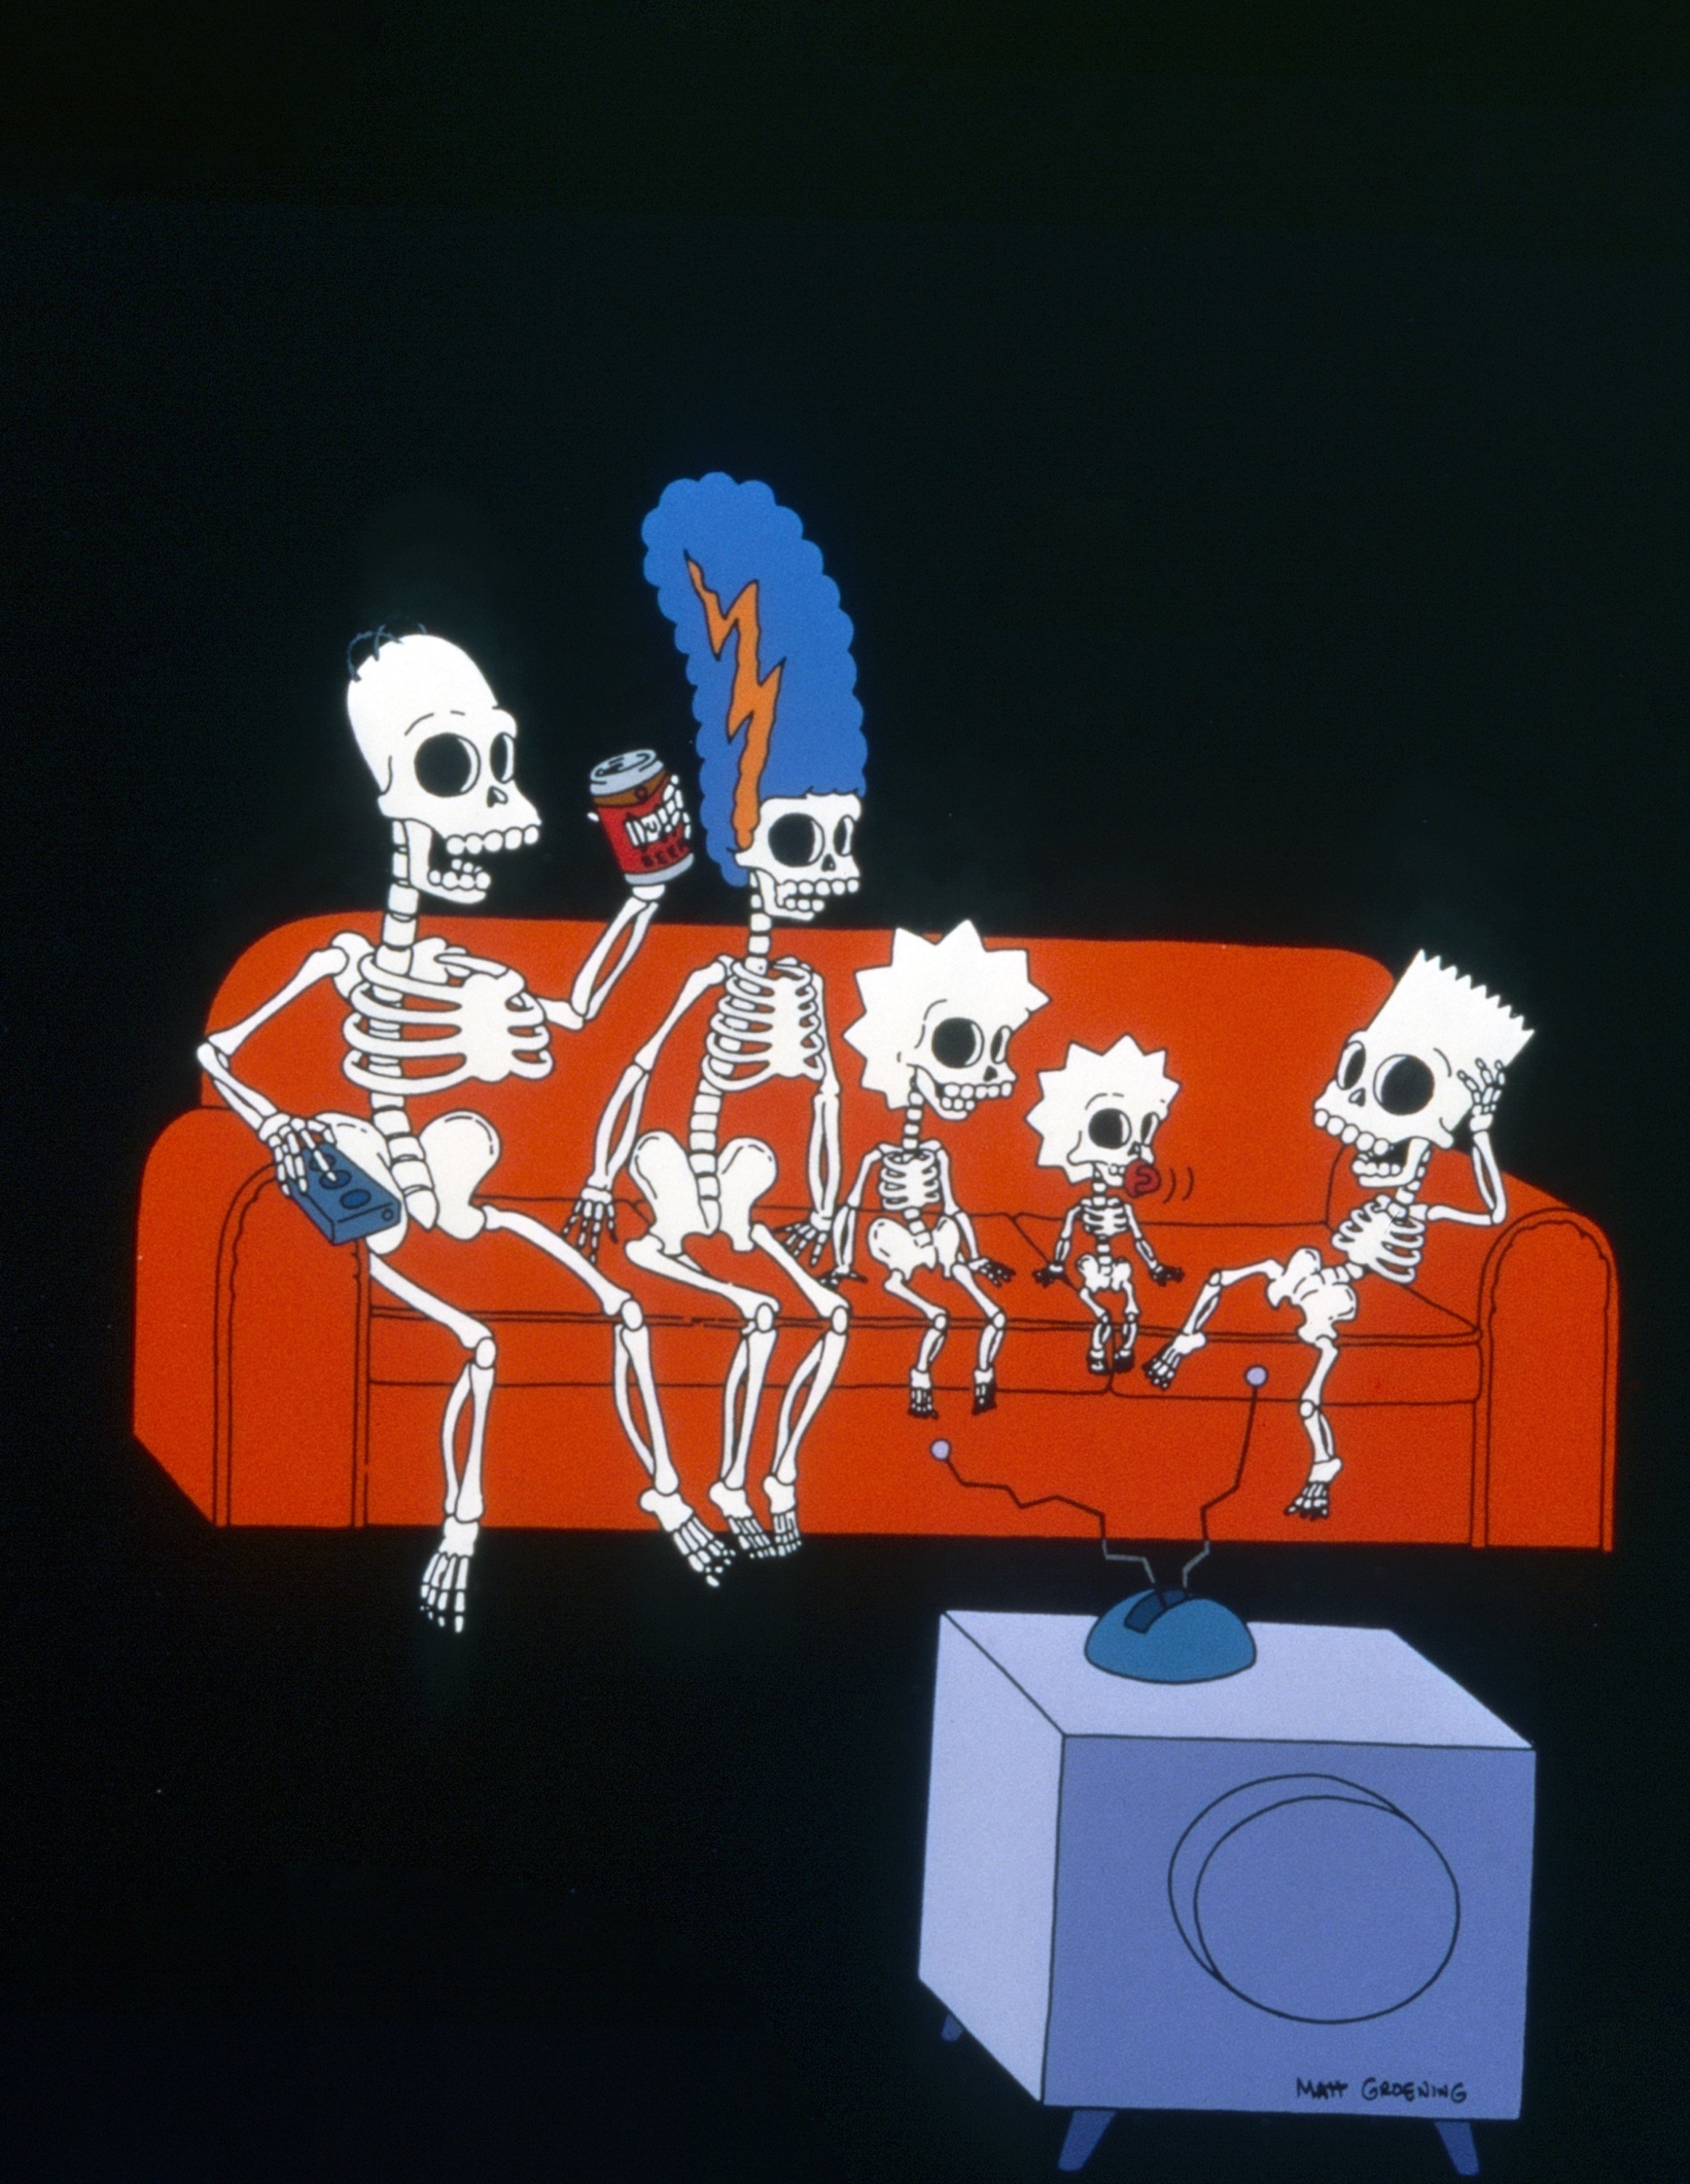 The Simpsons as skeletons watching TV